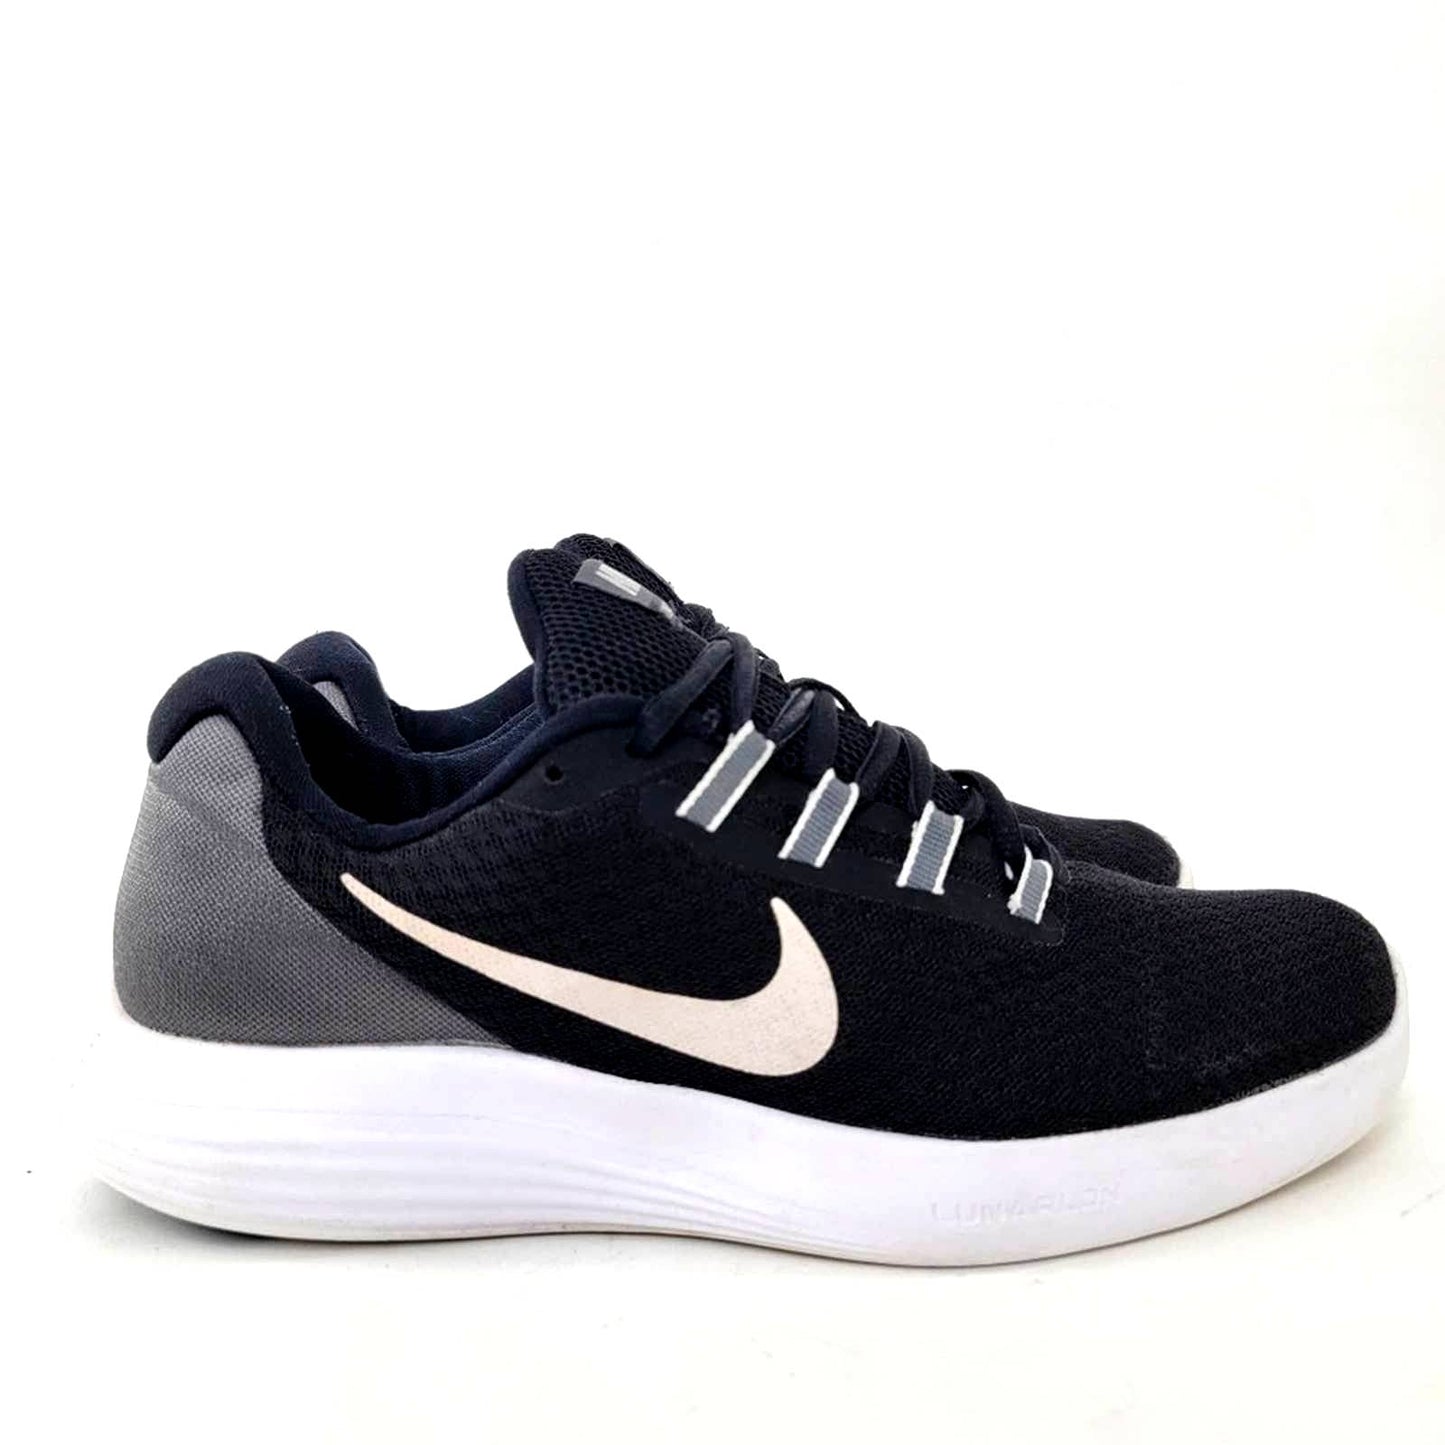 Nike Lunar Converge Running Shoes - 9.5/11